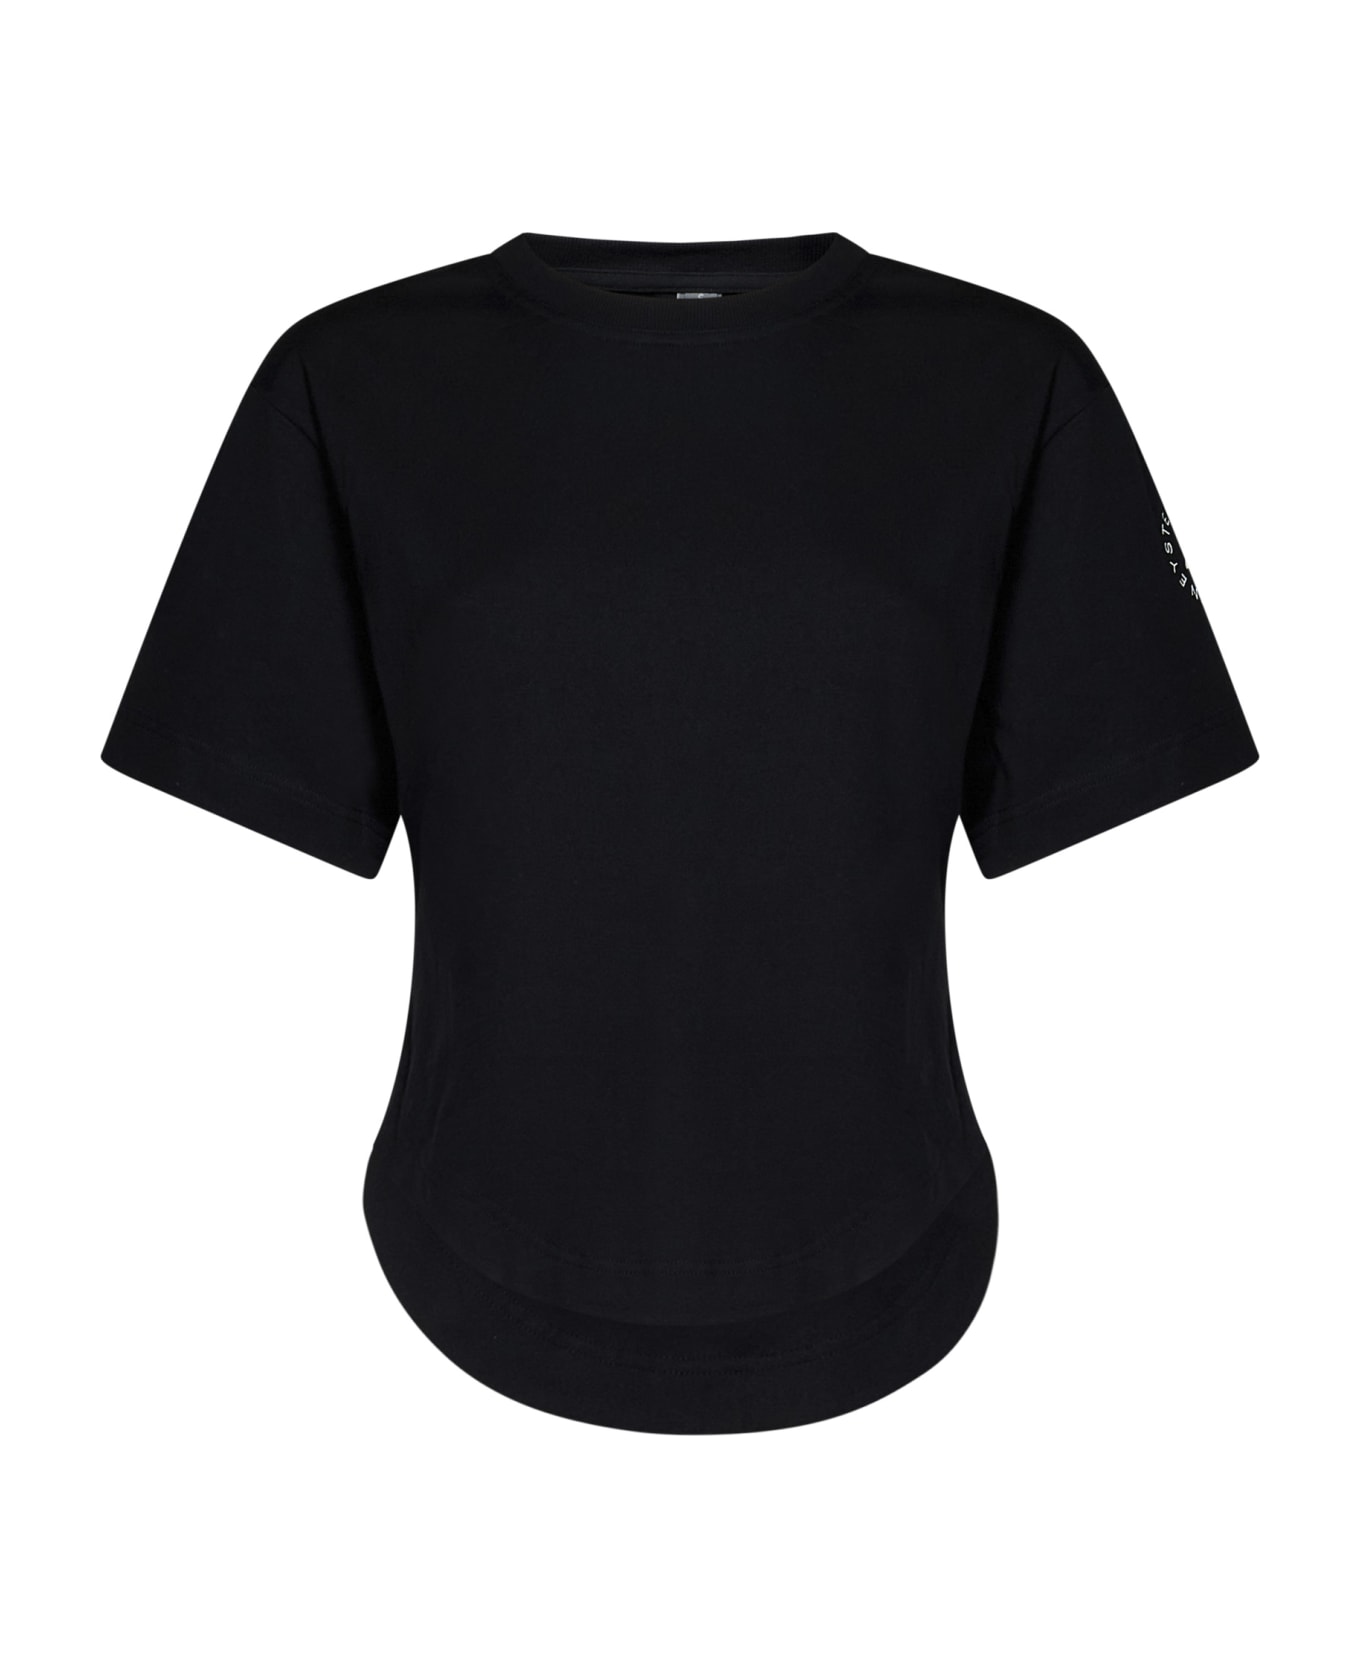 Adidas by Stella McCartney T-shirt - Black Tシャツ